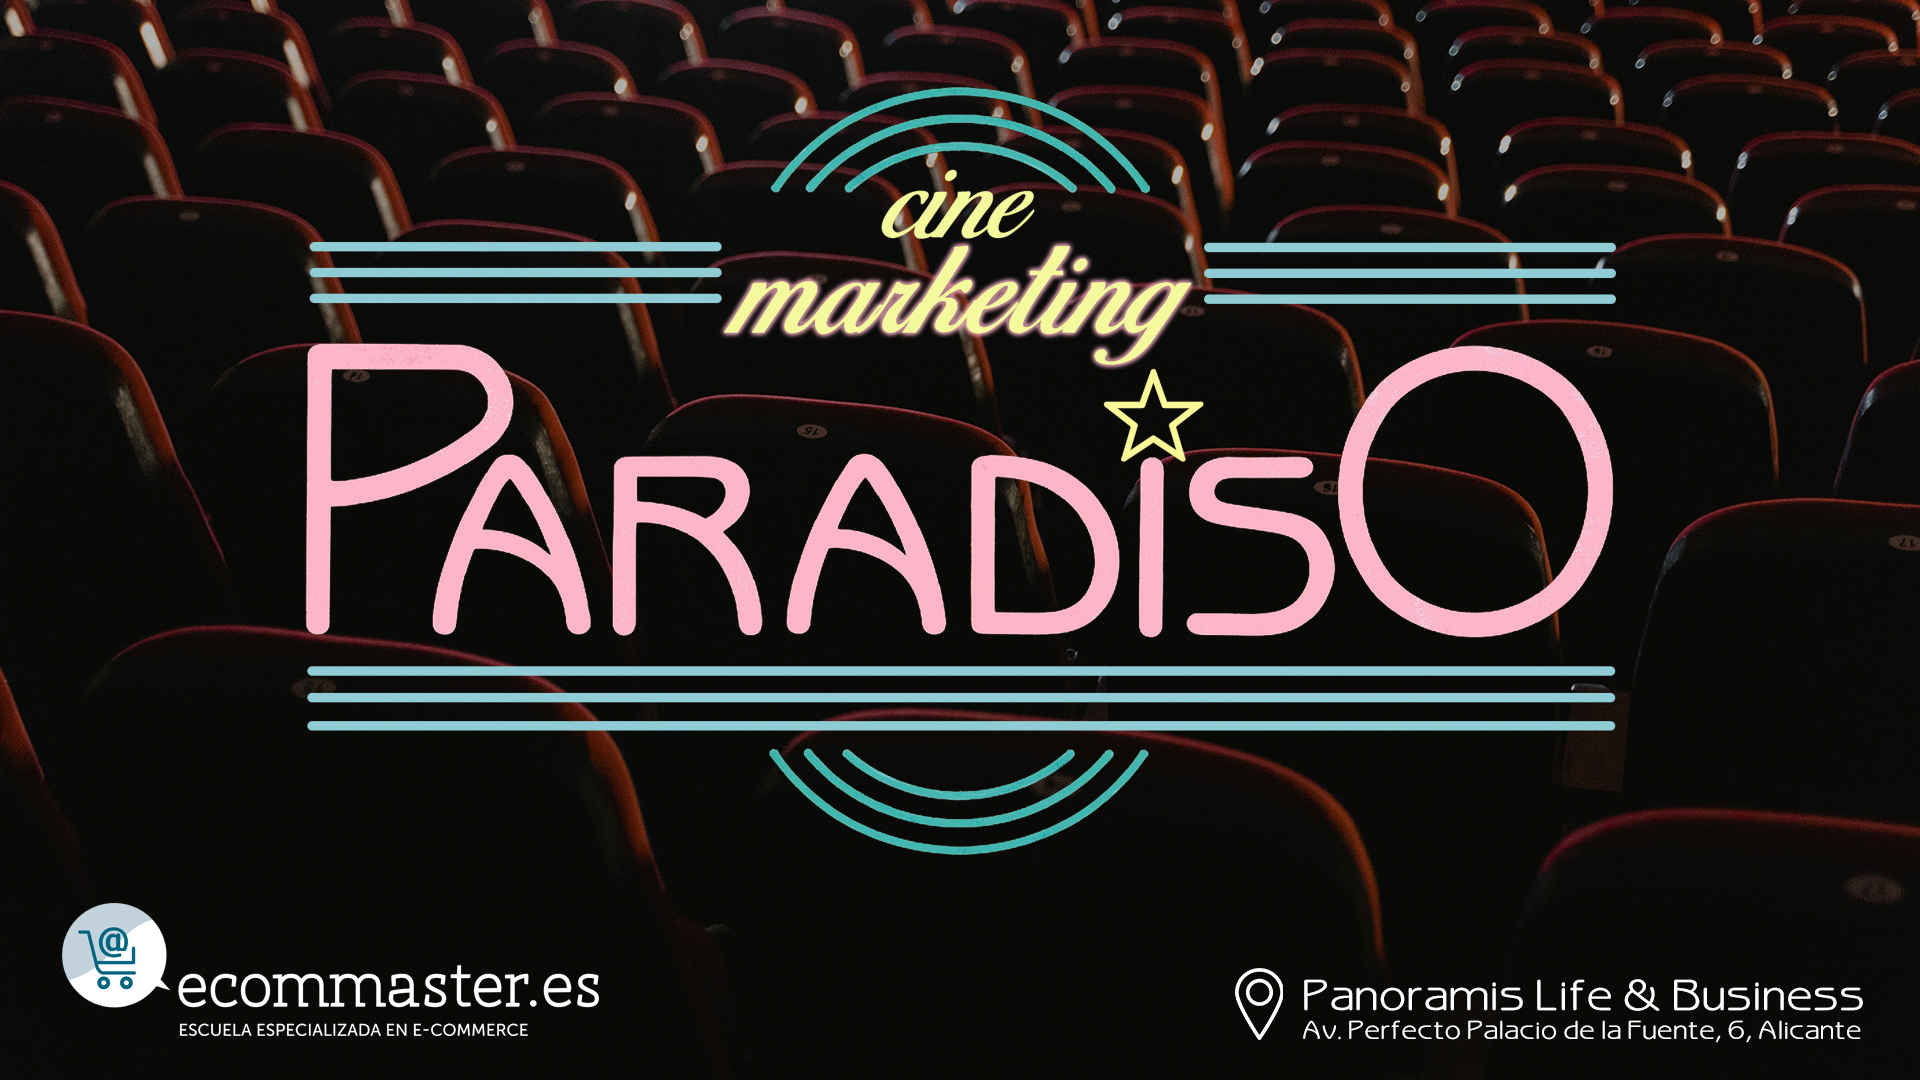 CineMarketing Paradiso Congreso Ecommaster